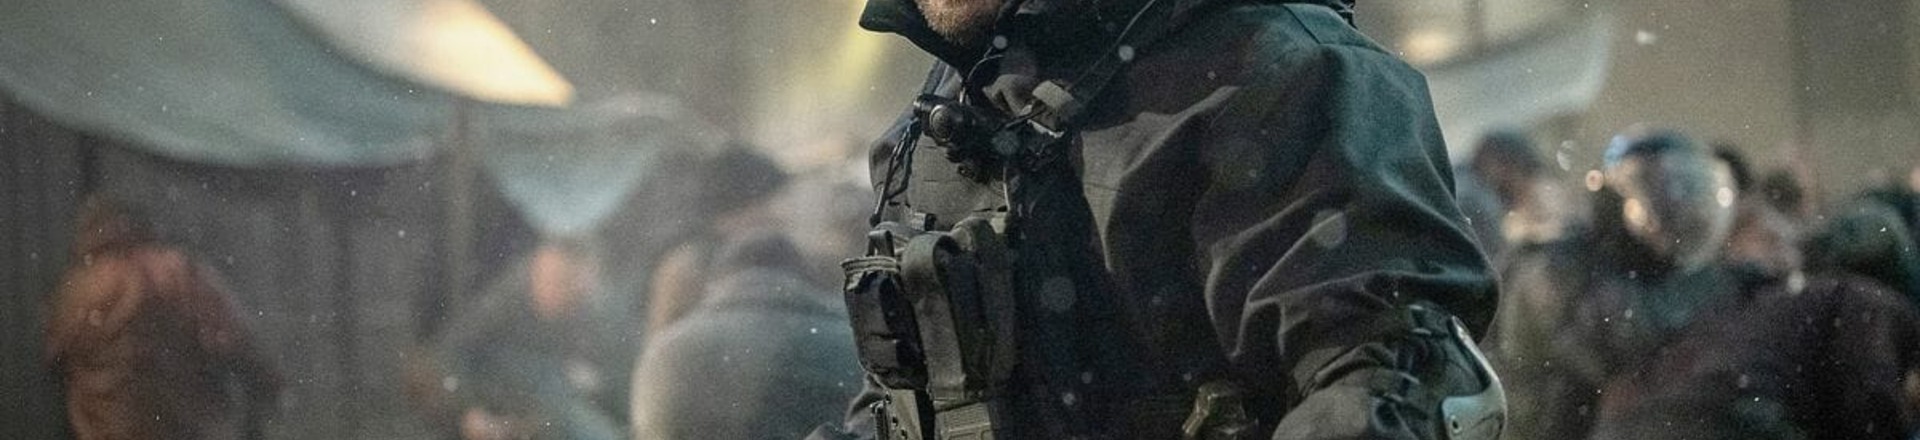 Chris Hemsworth como Tyler Rake em Resgate 2.